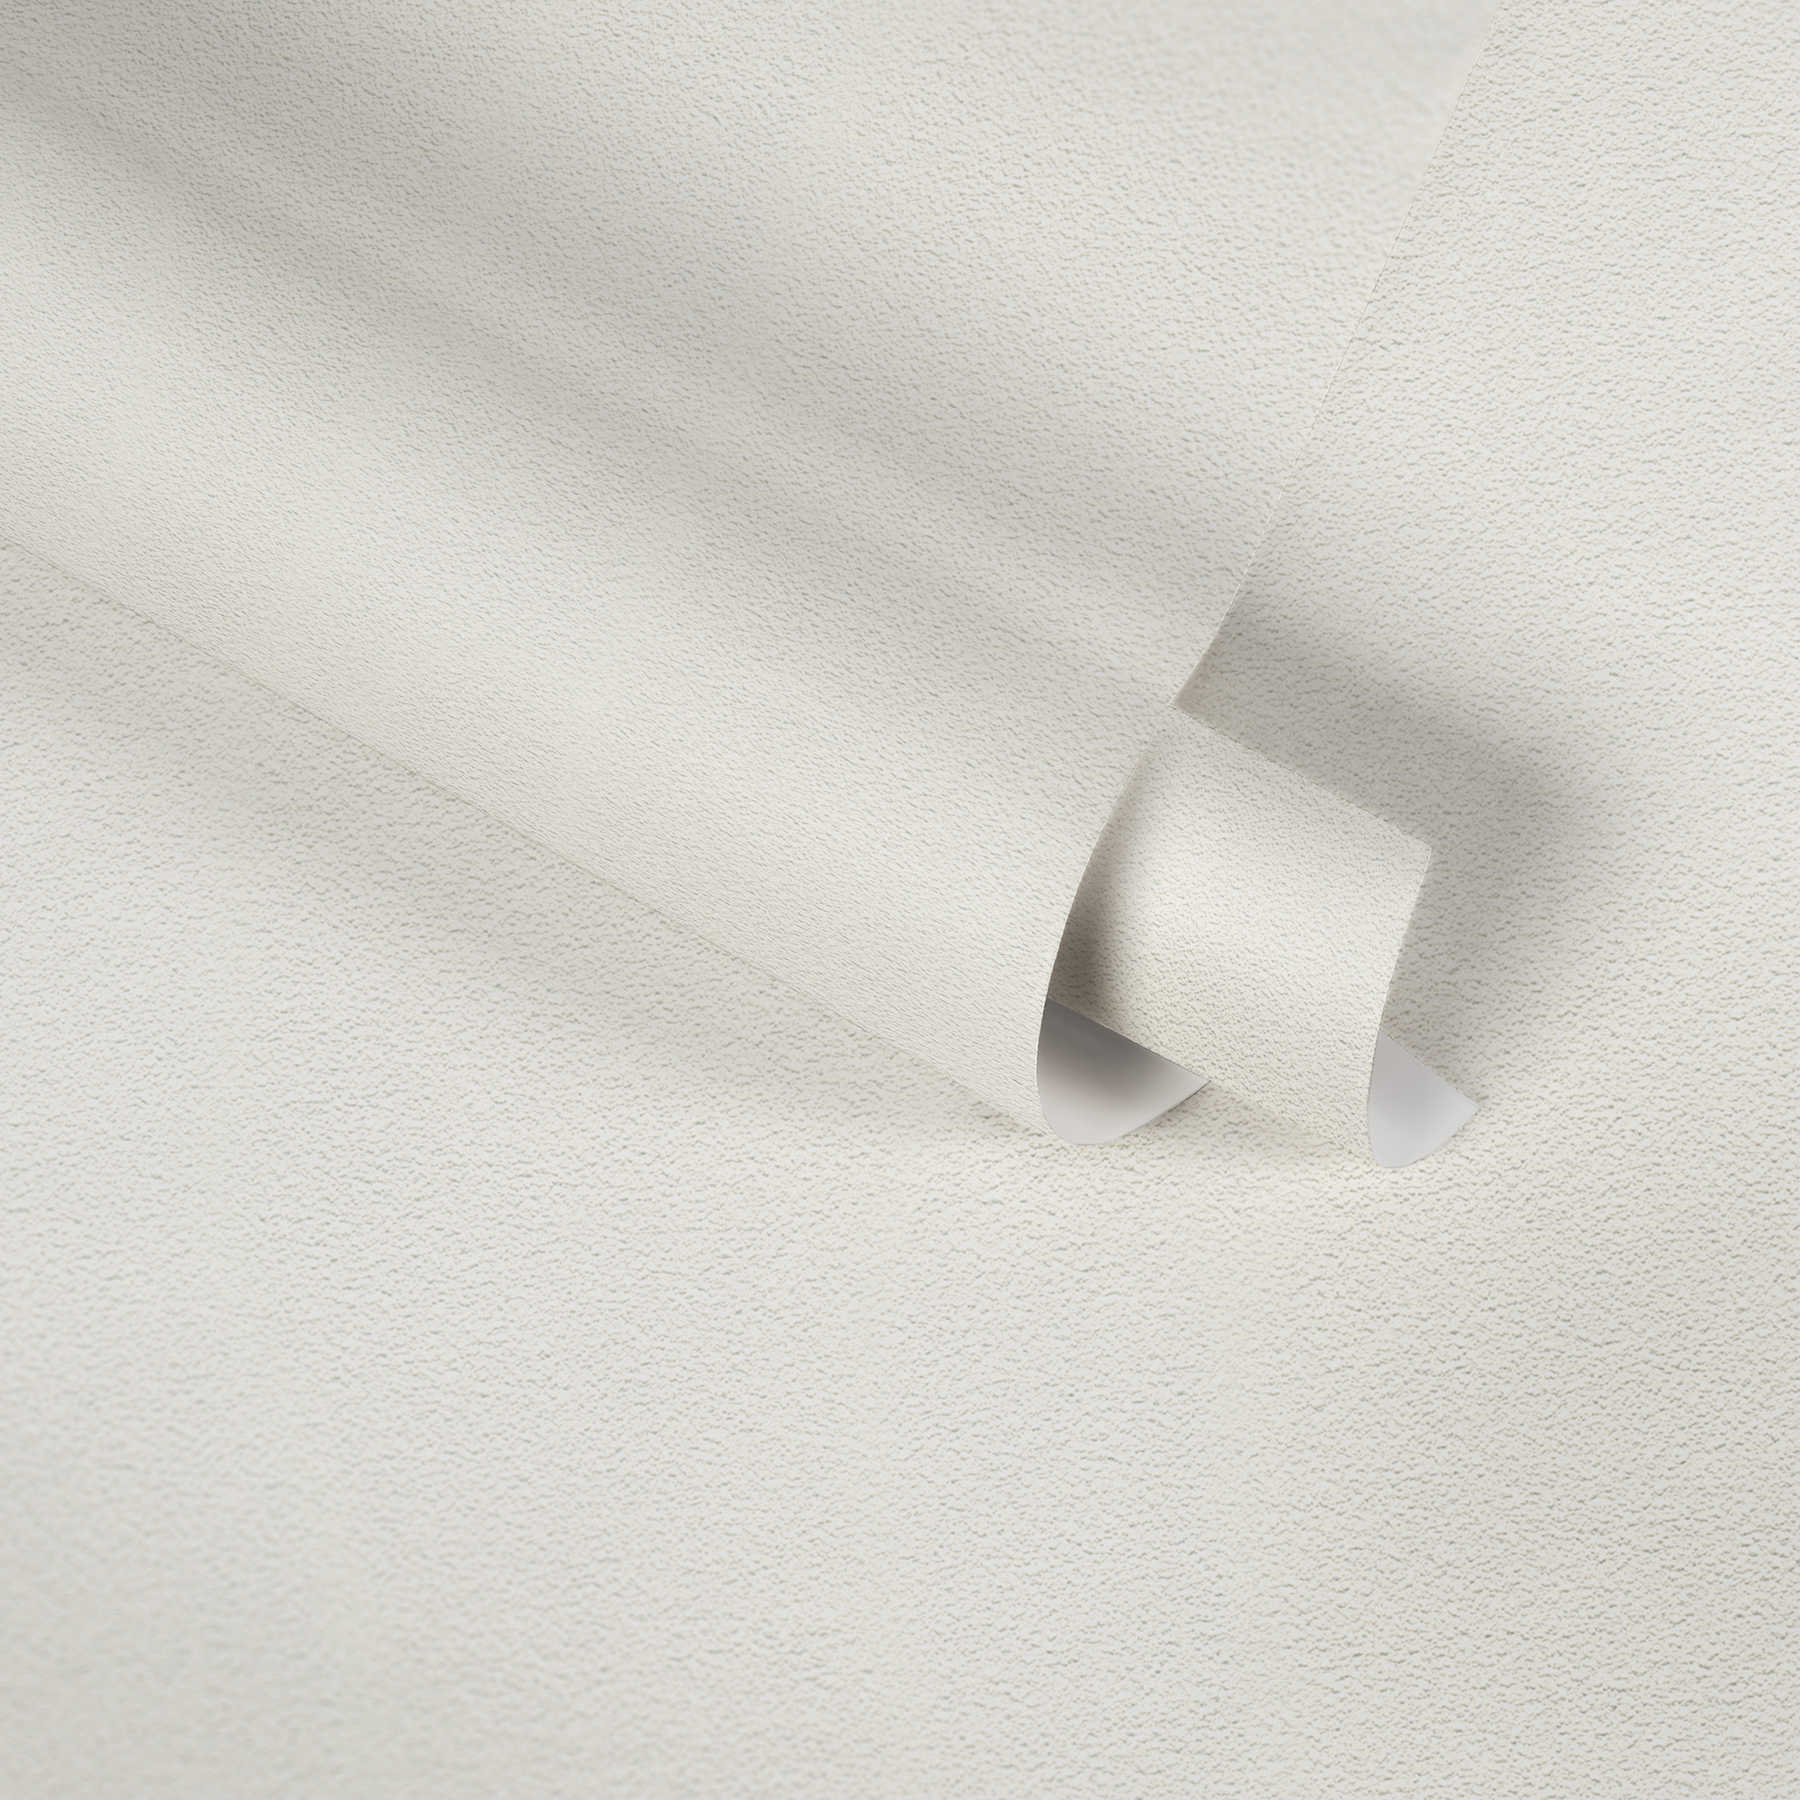             Carta da parati bianca liscia con struttura bidimensionale in schiuma
        